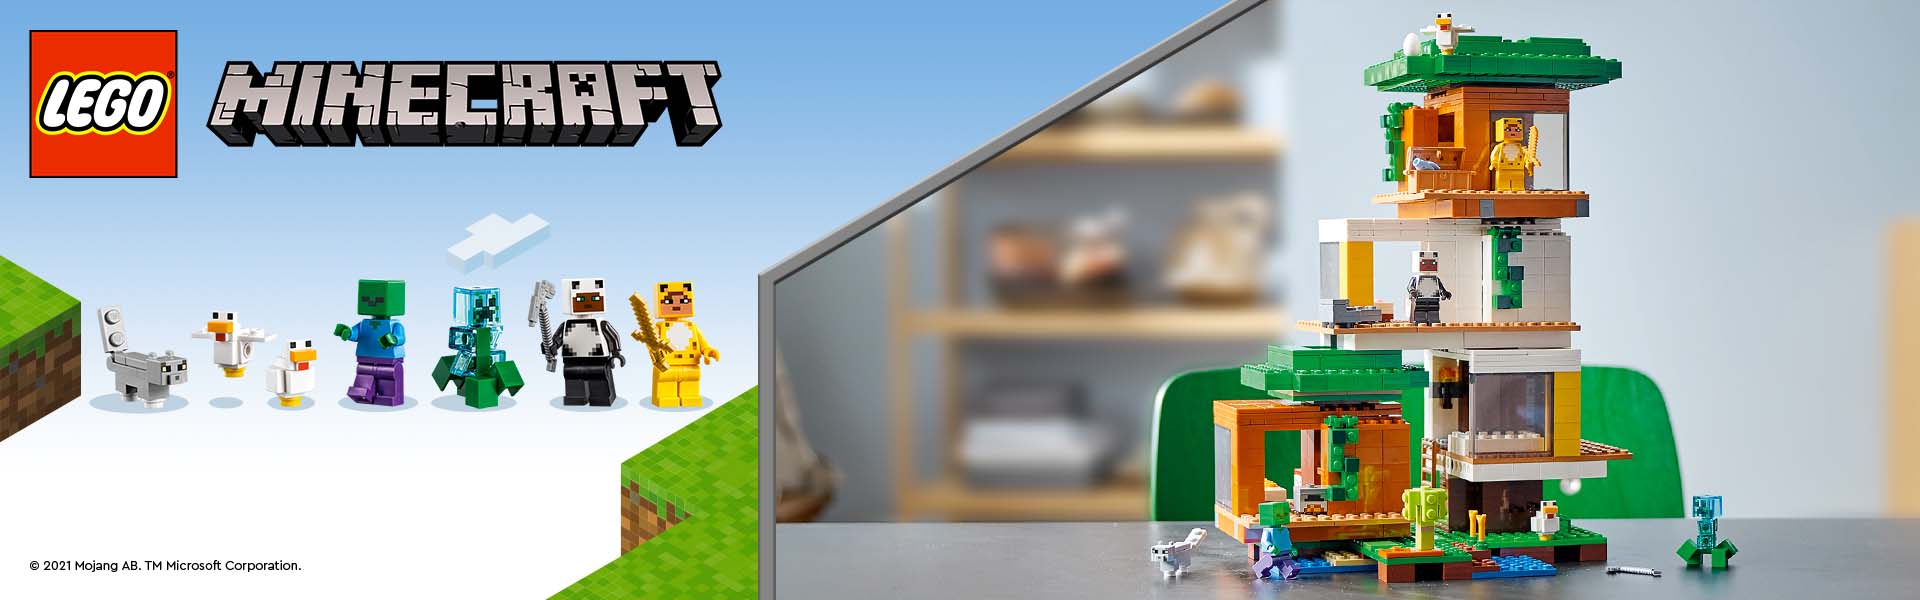 LEGO-Subbrand-header-1920x600-Minecraft.jpg